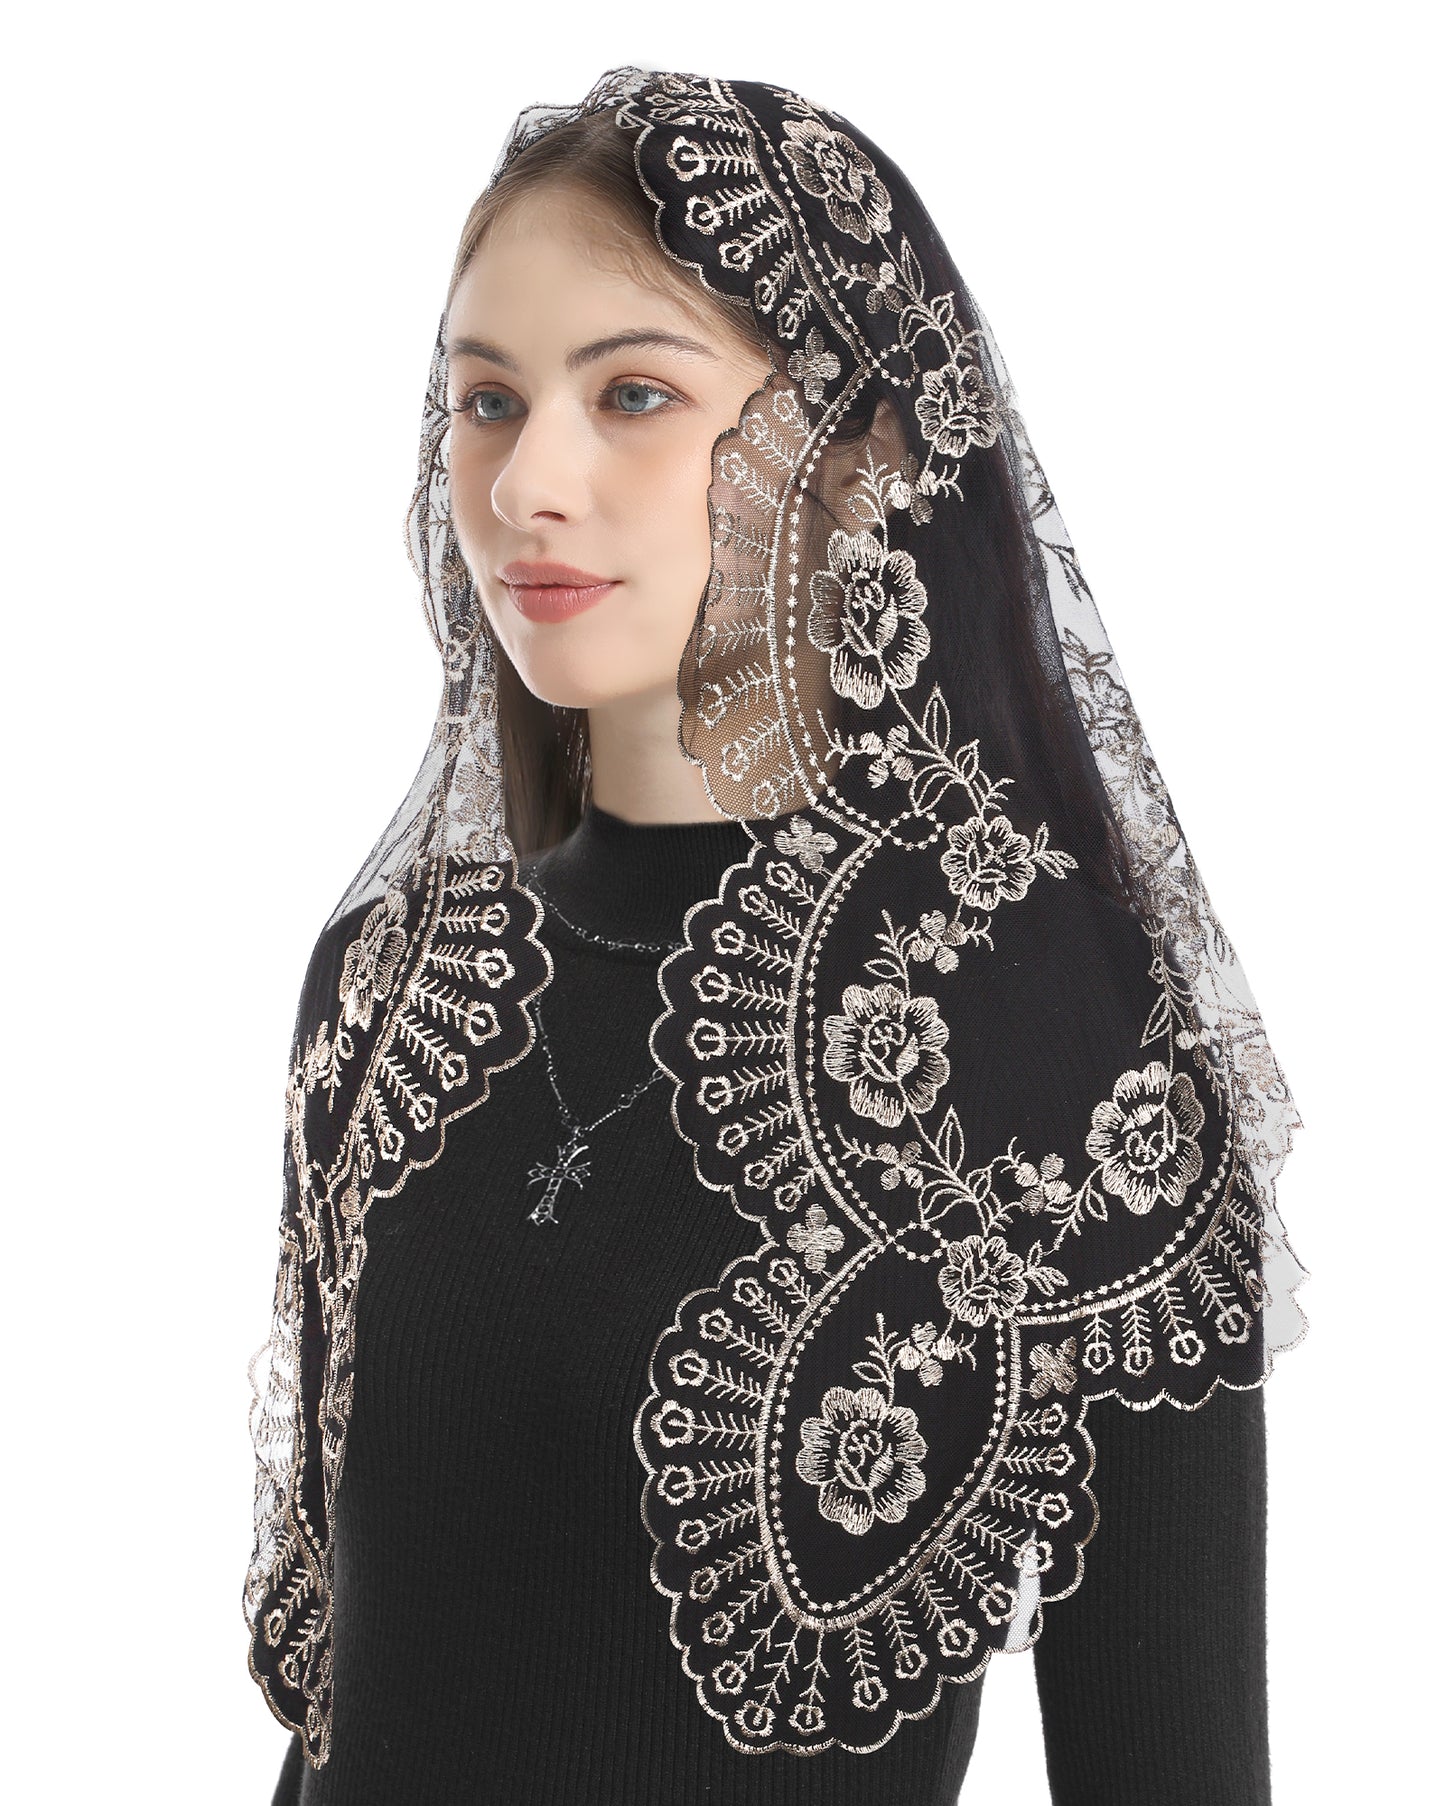 Bozidol Women's Catholic Mantilla: Veils Sacred Vintaged Lace Scarf Shawl Spanish Style Church Mass Veil